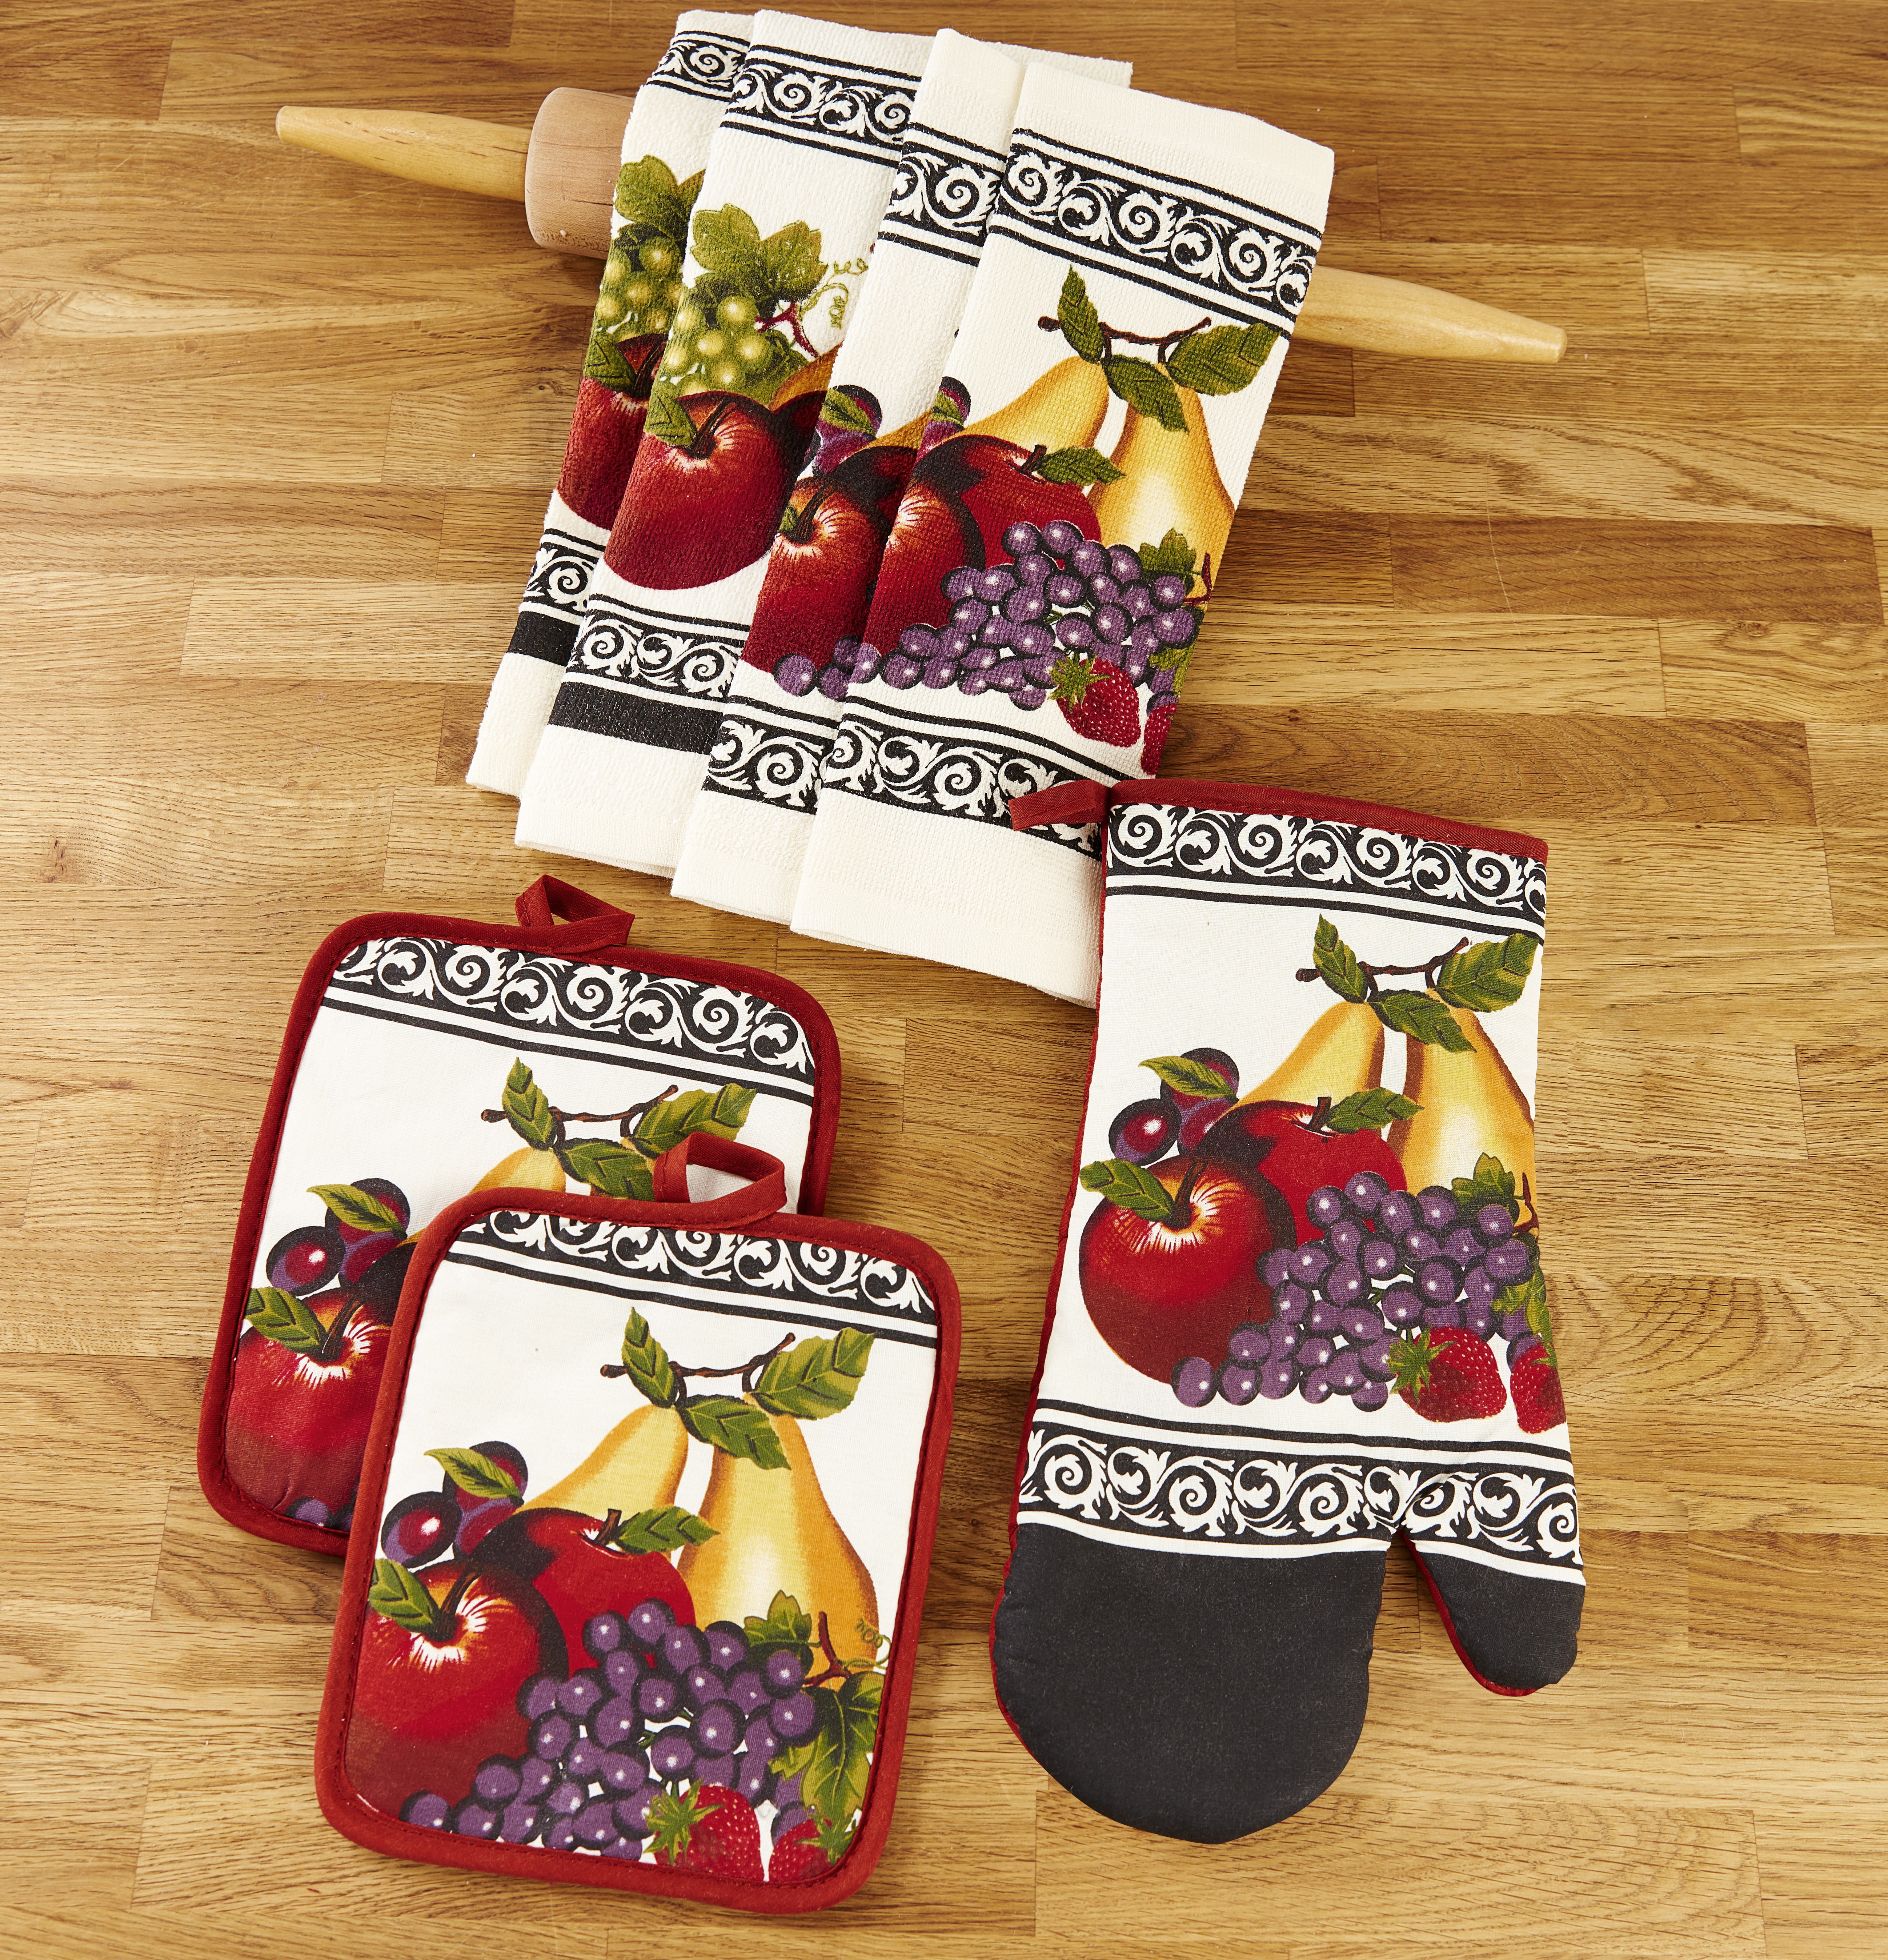 1 Audrina's Kitchen Kay Dee Designs Sweet Orchard Apples Theme Kitchen Linen Set- Bundle Includes Towels, Pocket Mitt Potholder and Oven Mitt Grabber 1 2